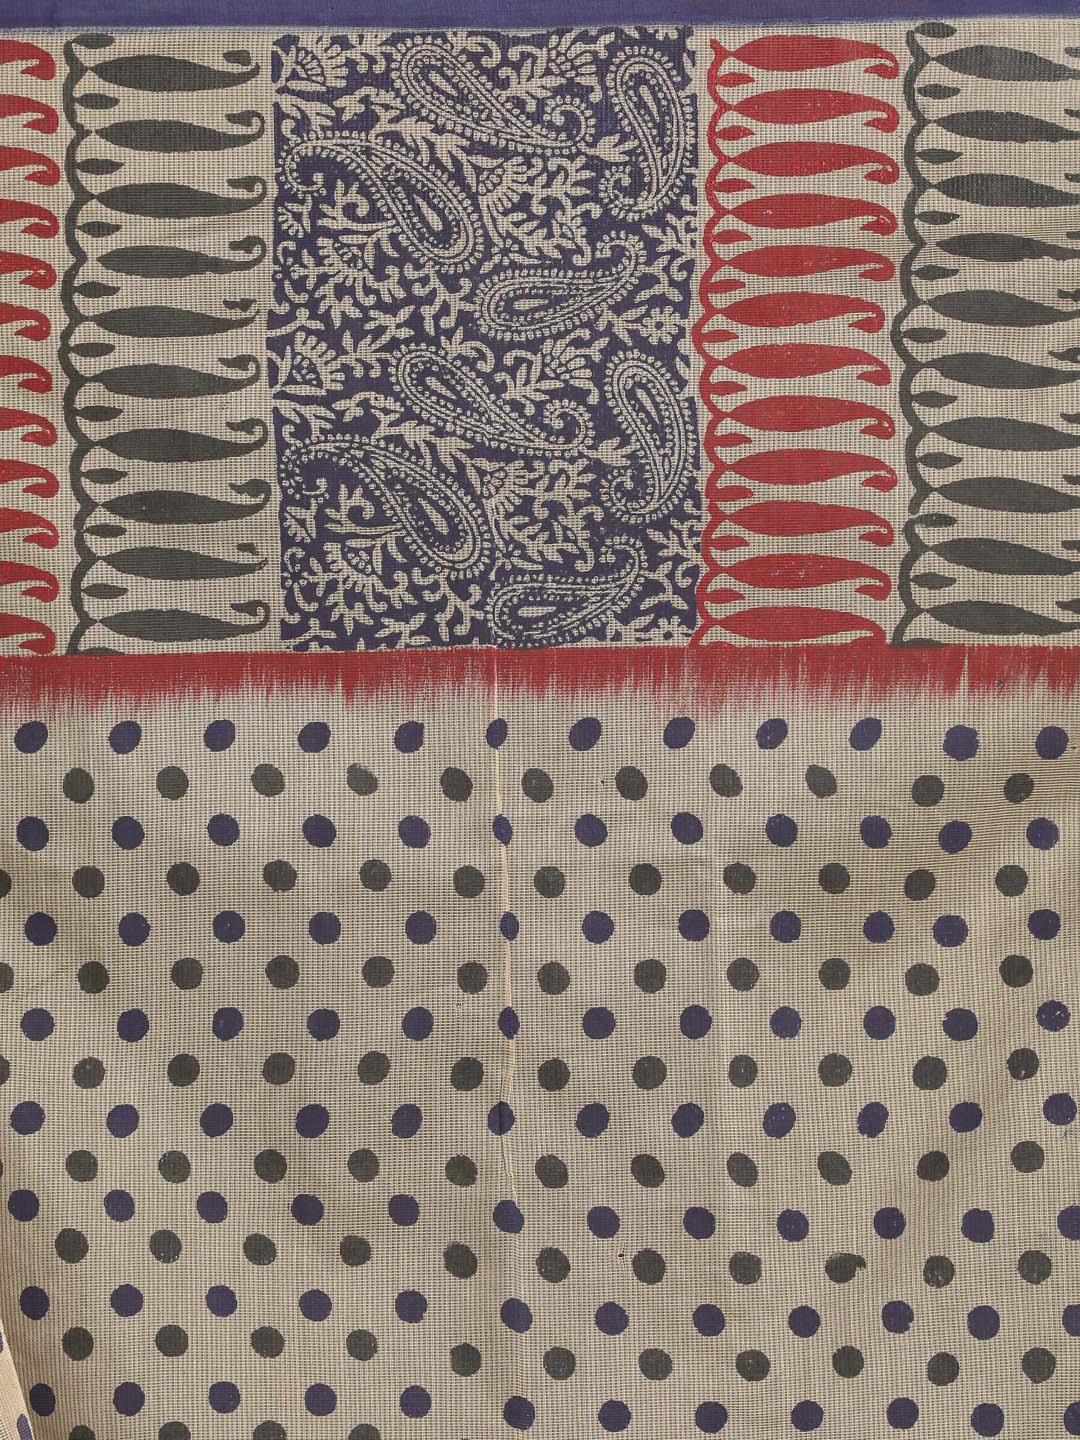 Indethnic Printed Cotton Blend Saree in navy blue - Saree Detail View